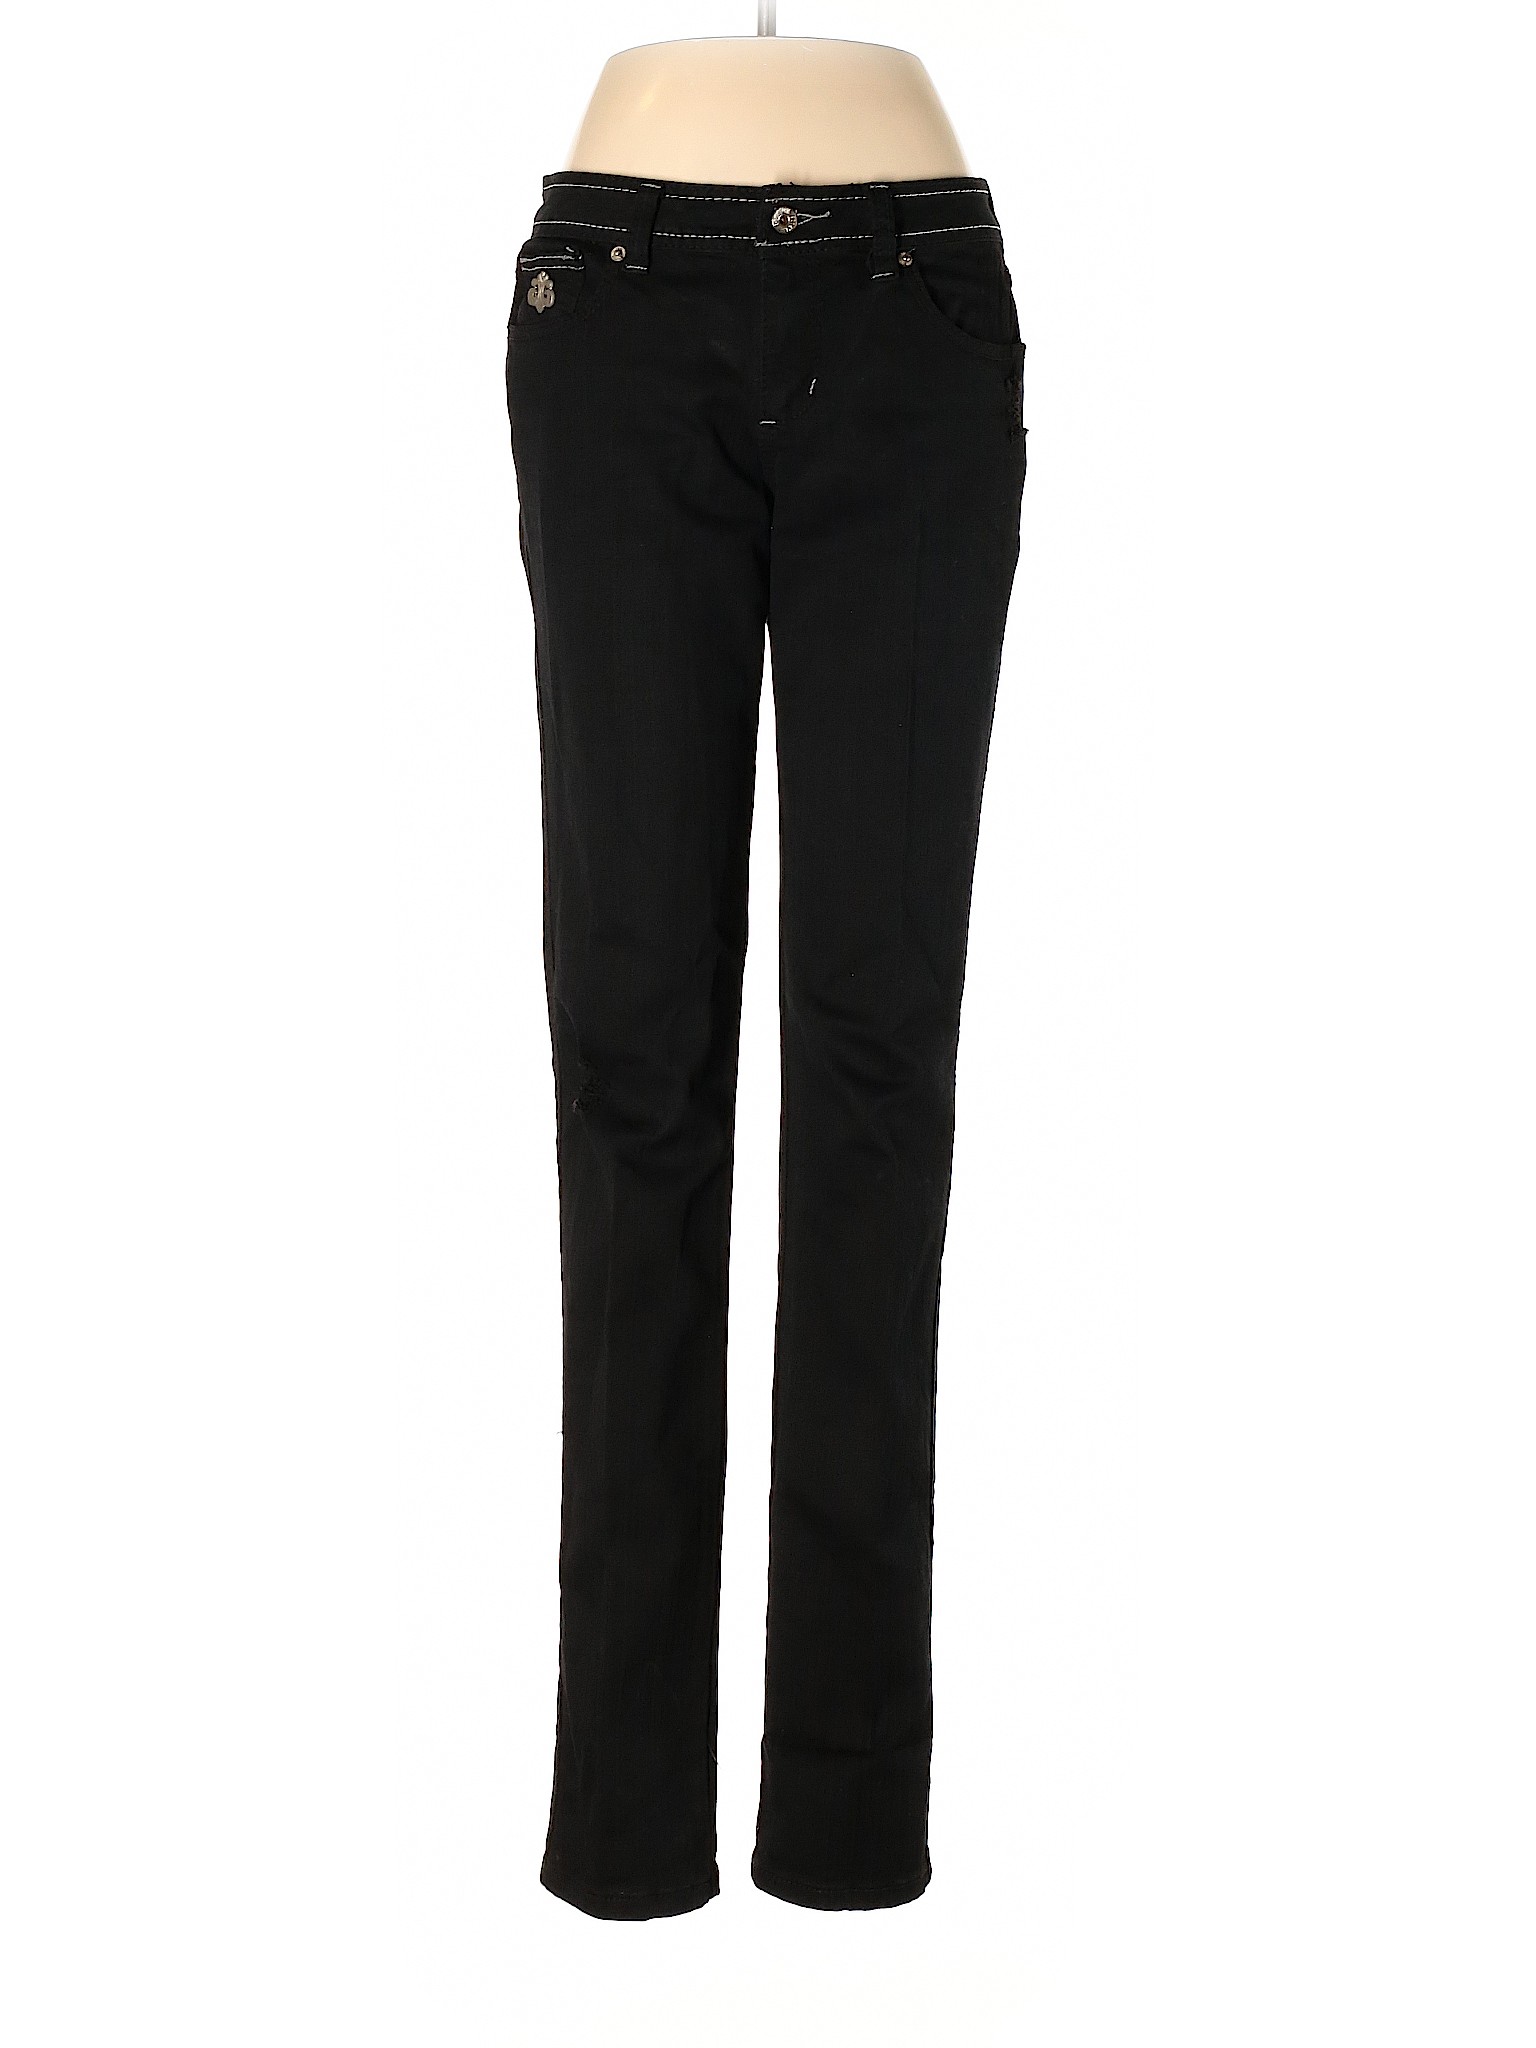 Dereon Women Black Jeans 9 | eBay